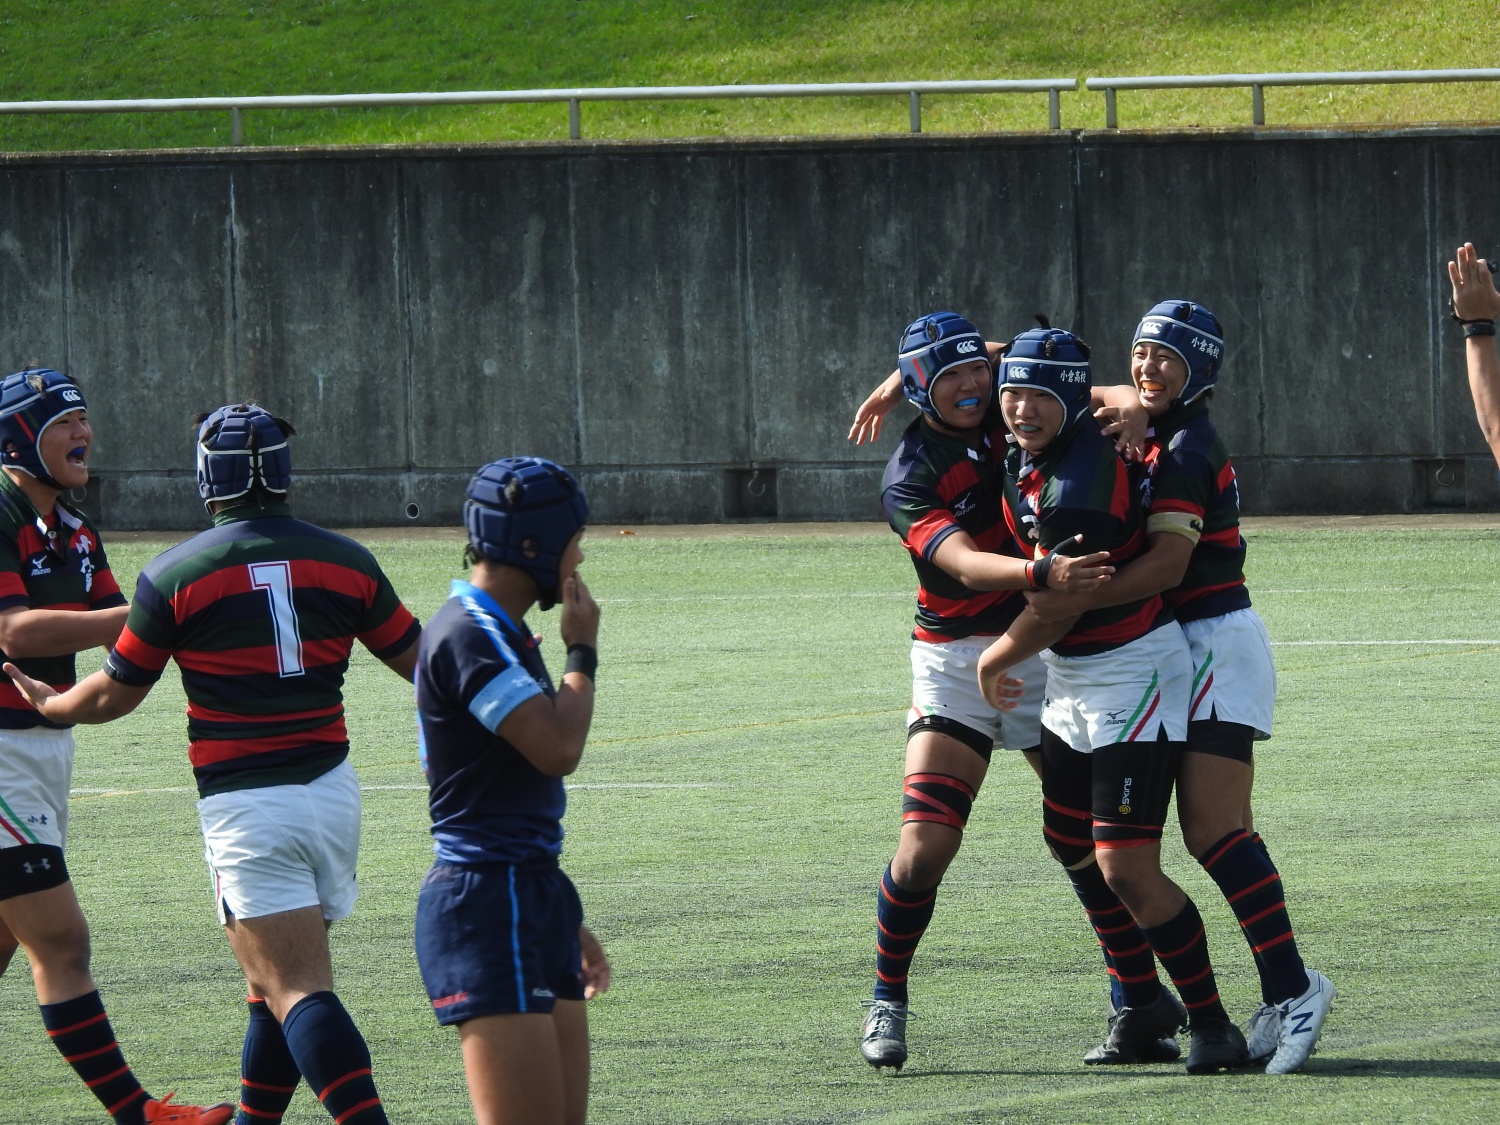 http://kokura-rugby.sakura.ne.jp/DSCN8073_xlarge.JPG